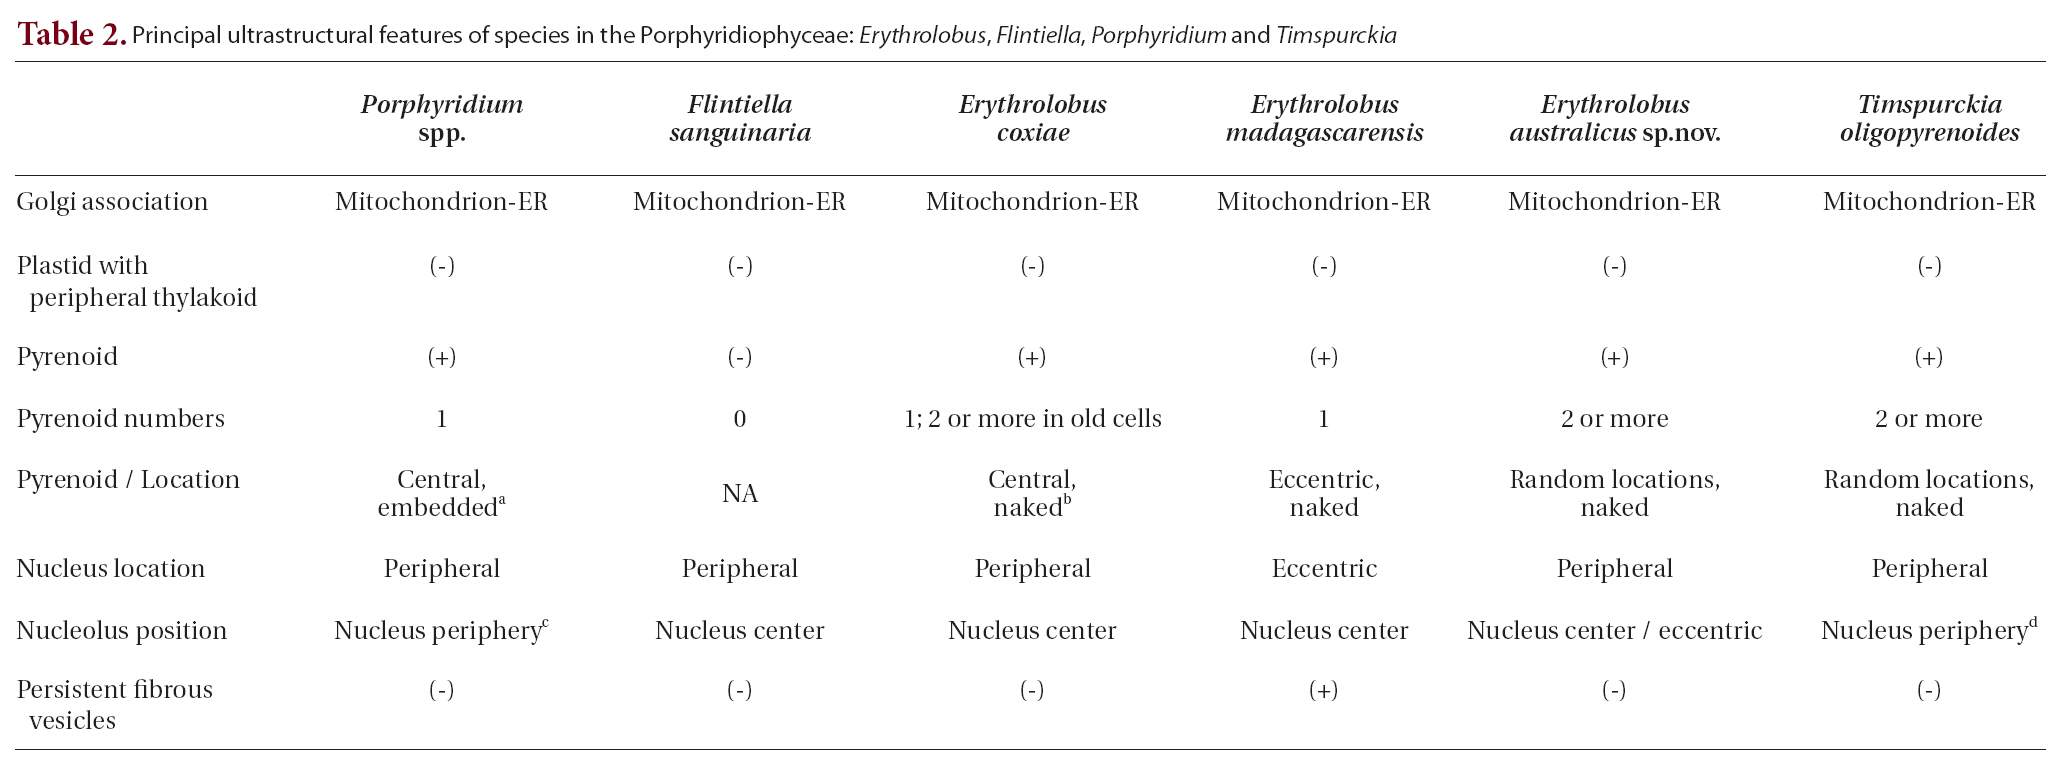 Principal ultrastructural features of species in the Porphyridiophyceae: Erythrolobus Flintiella Porphyridium and Timspurckia